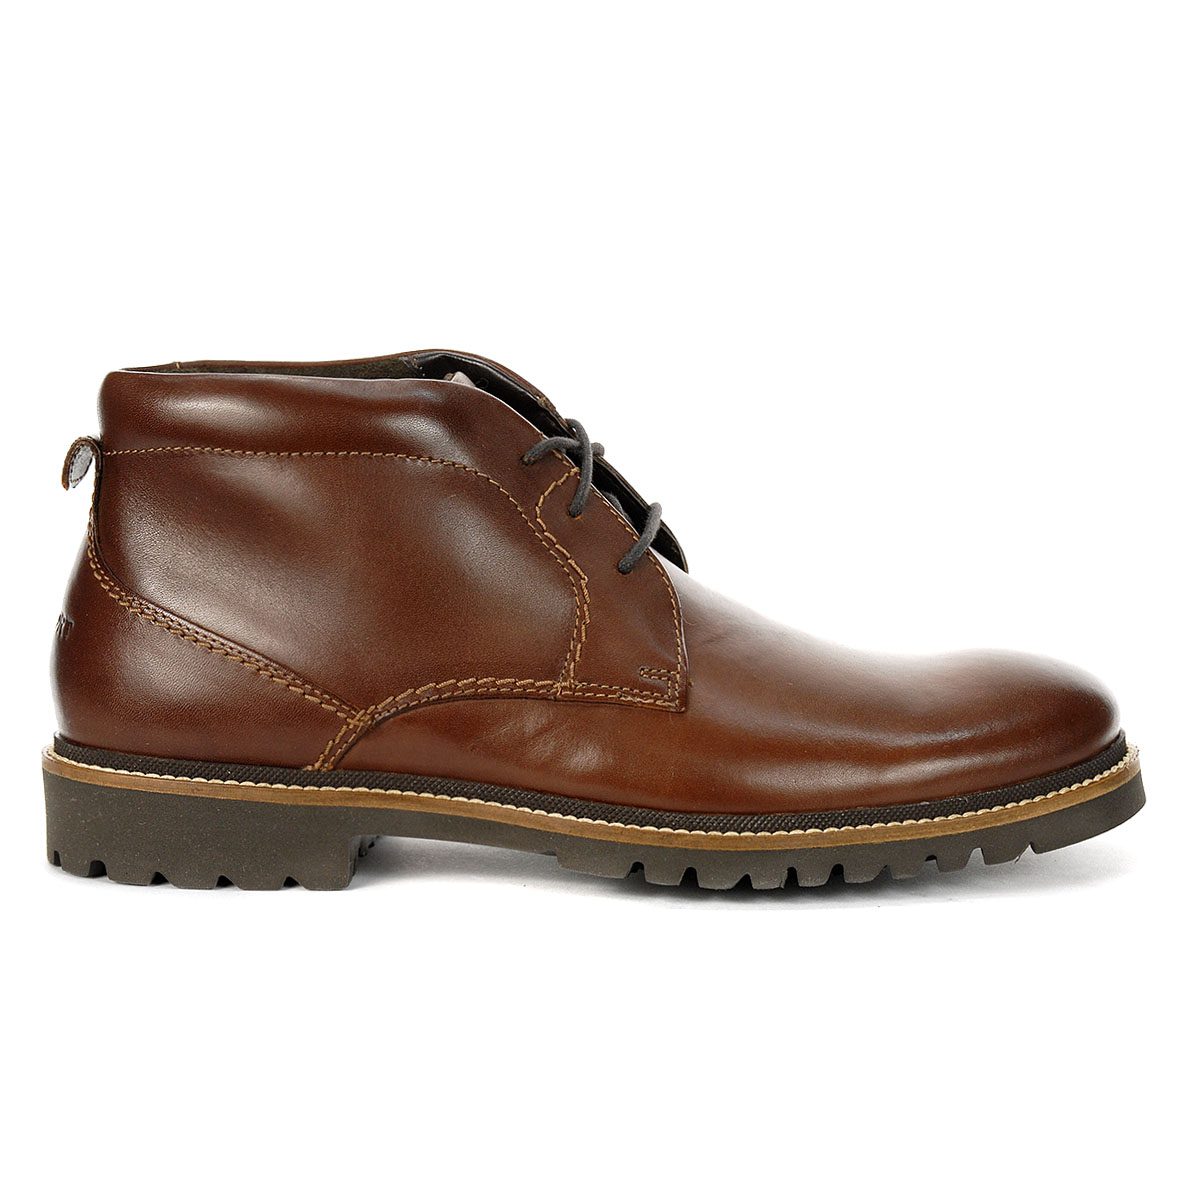 rockport chukka boots brown